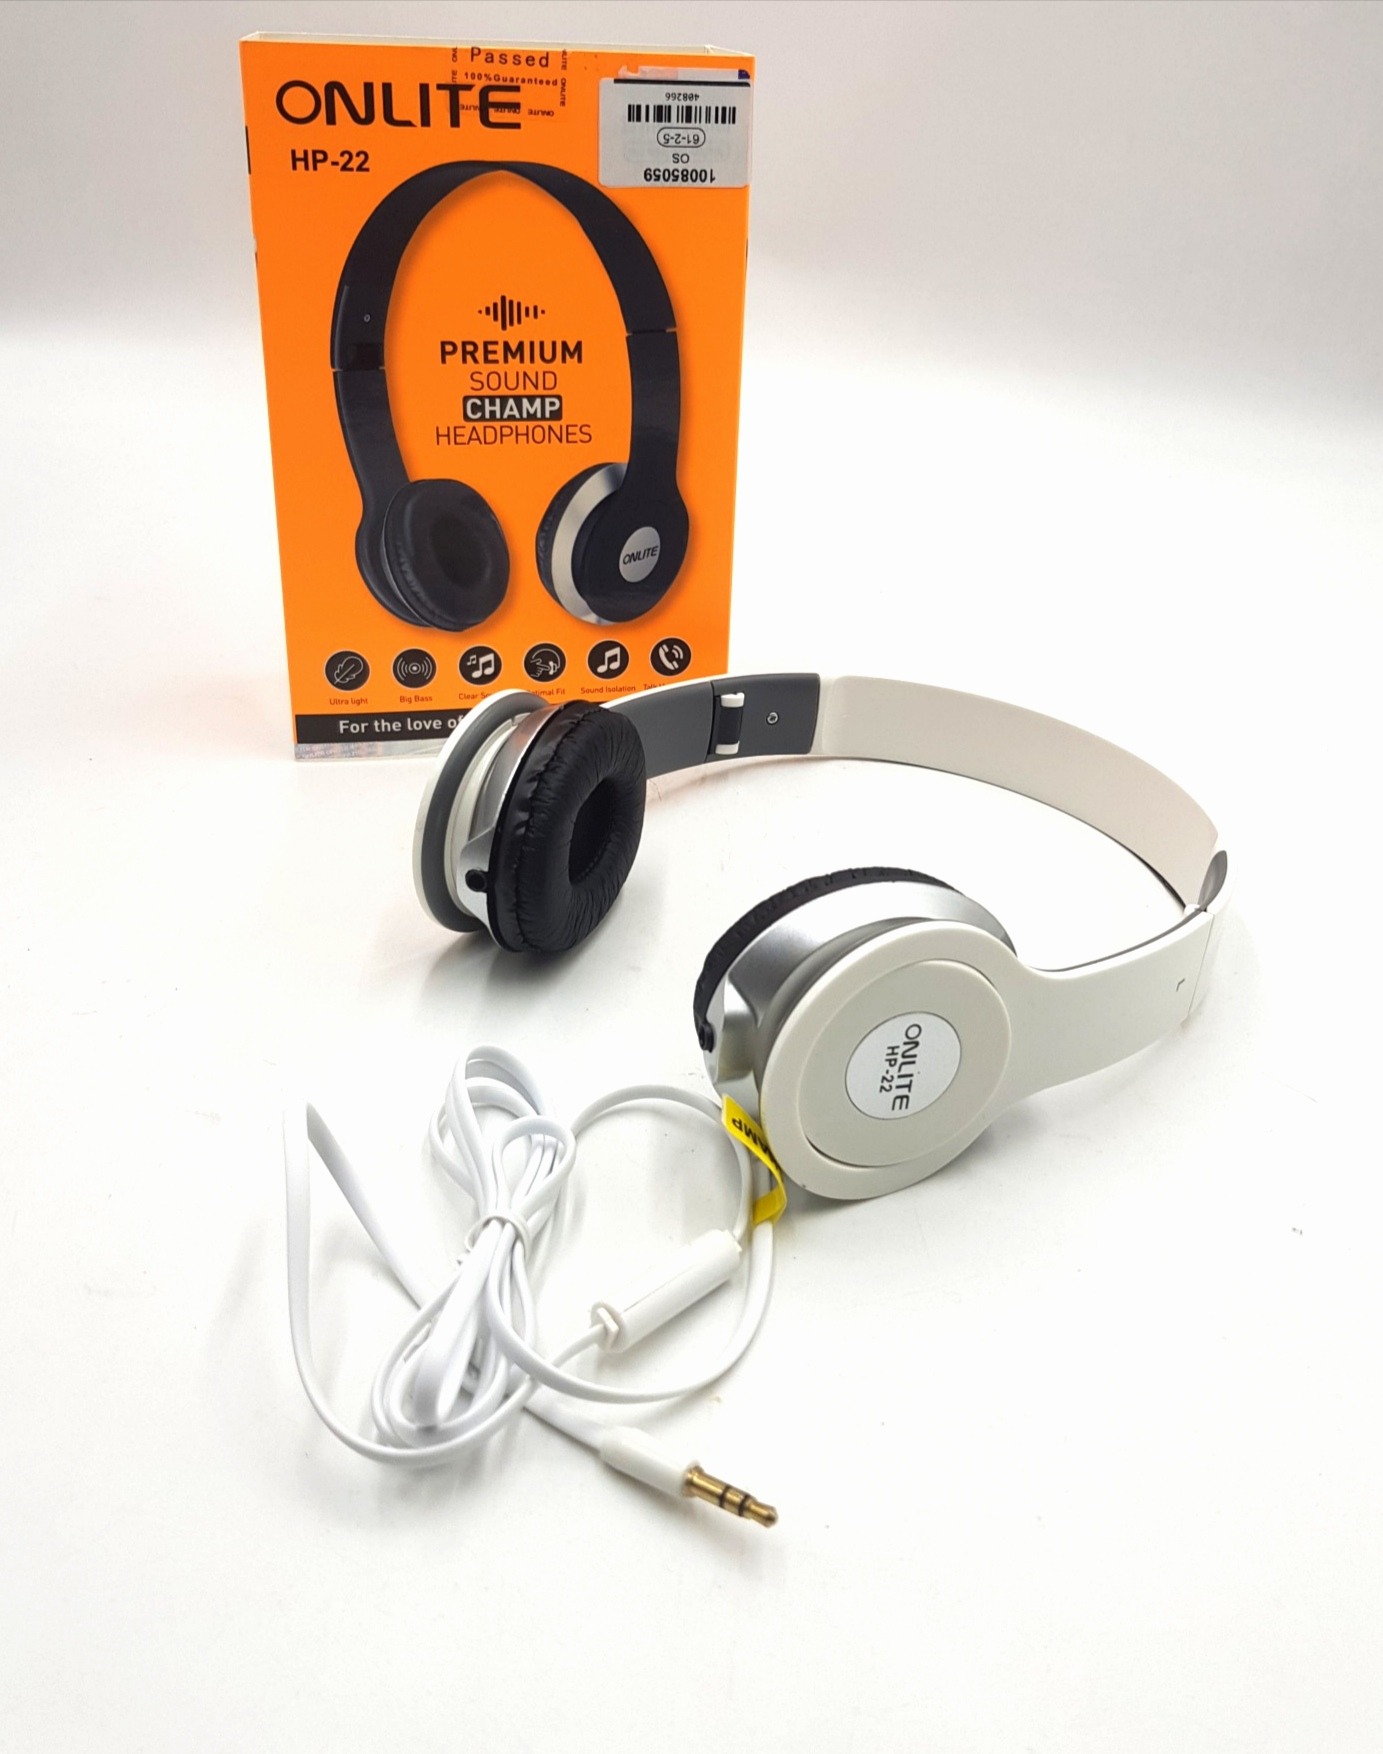 Onlite Premium Sound Champ Headphones HP-22